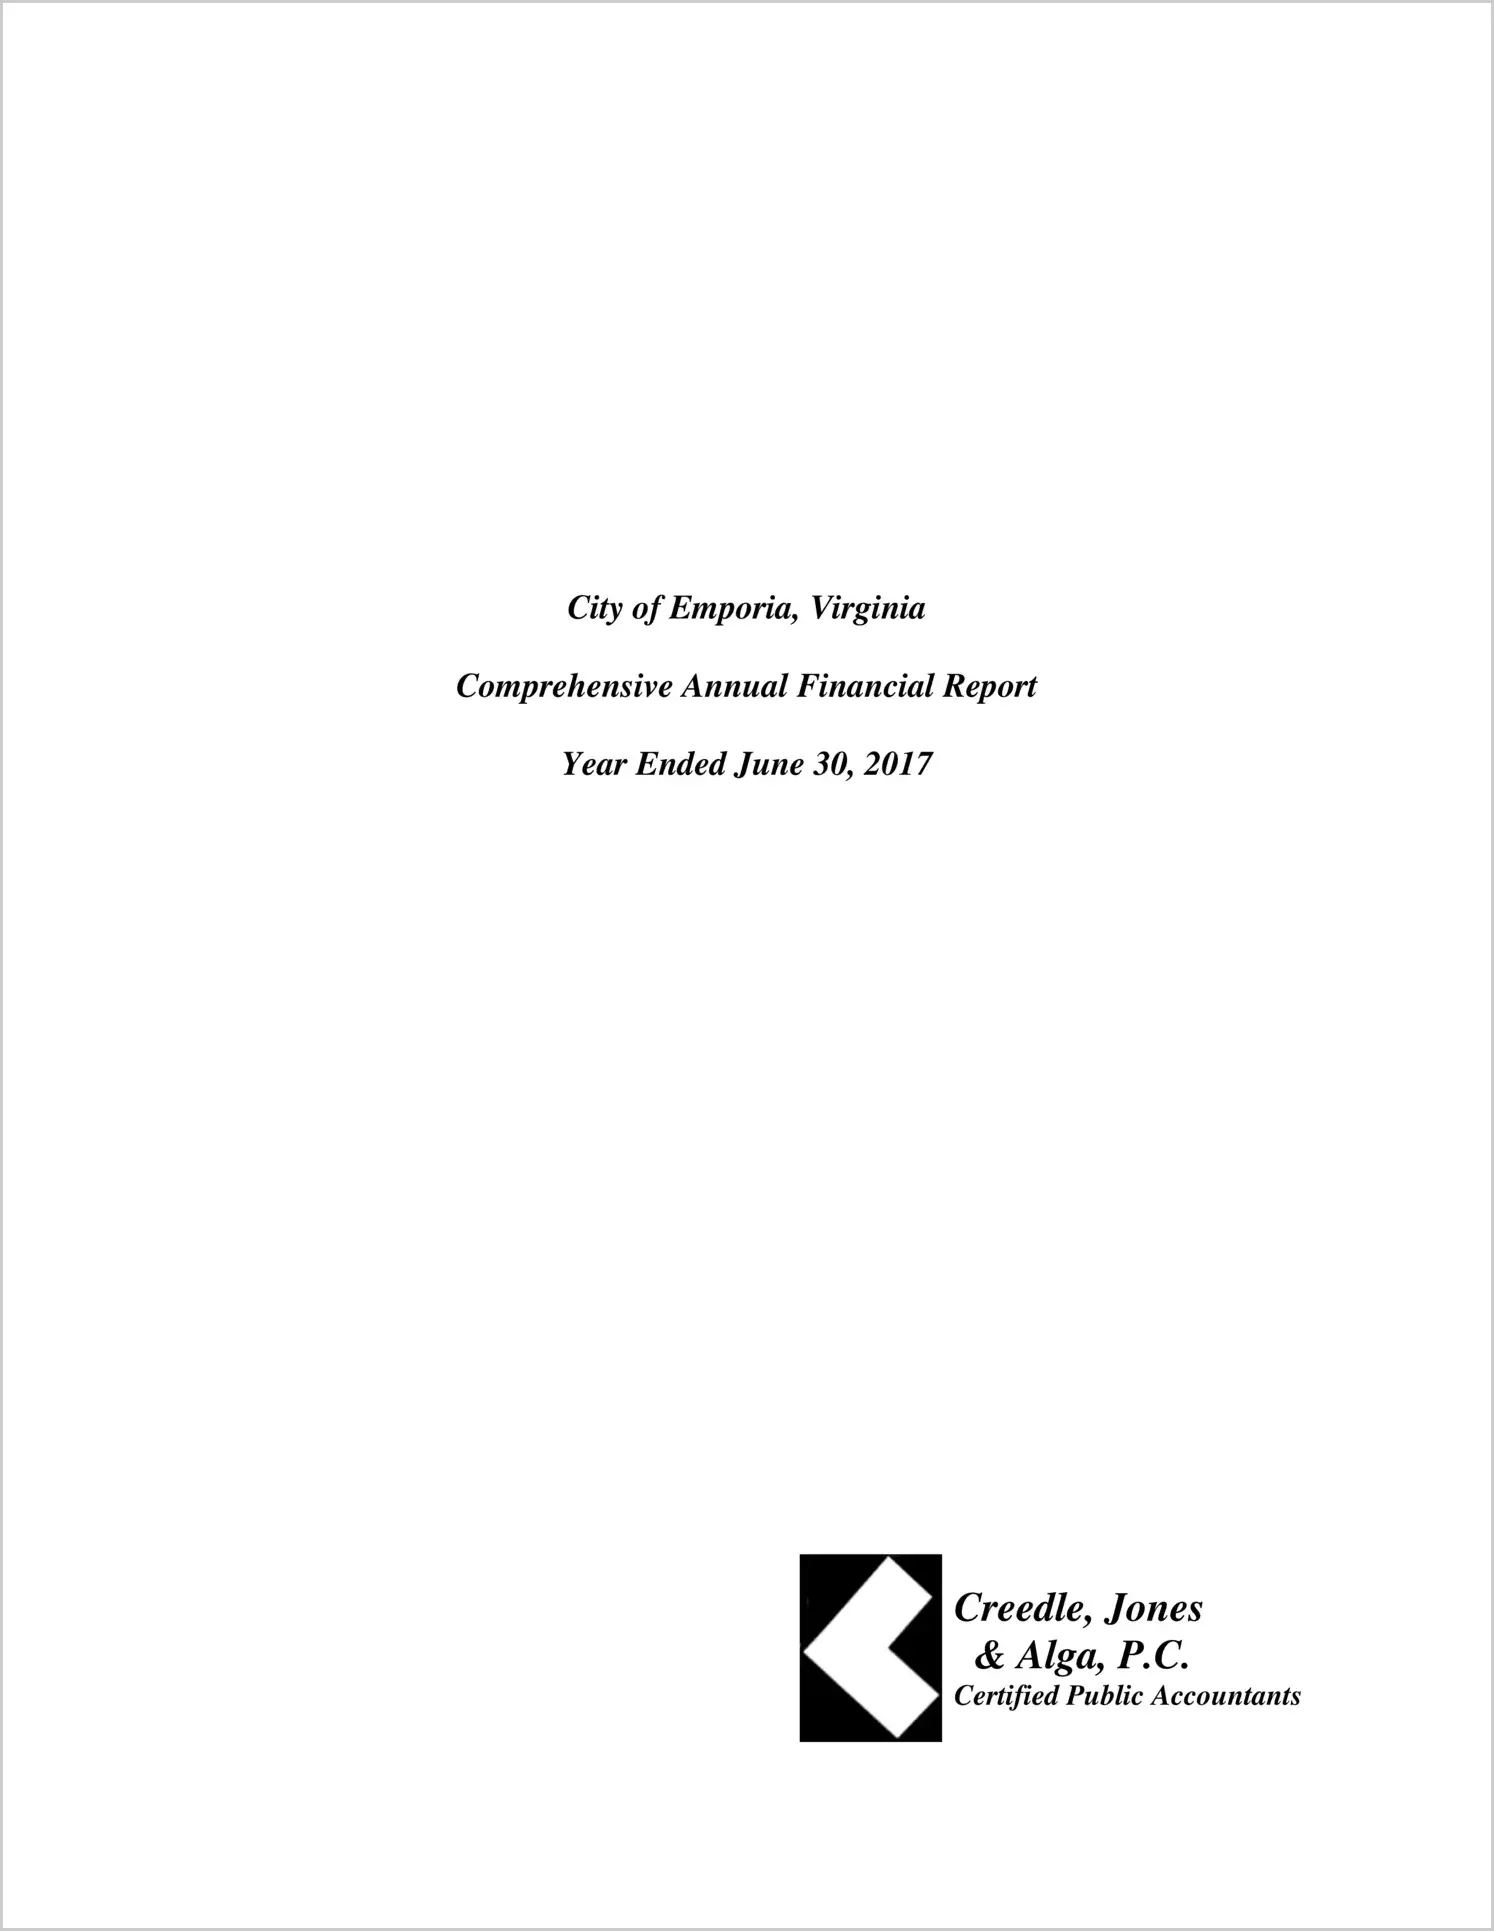 2017 Annual Financial Report for City of Emporia